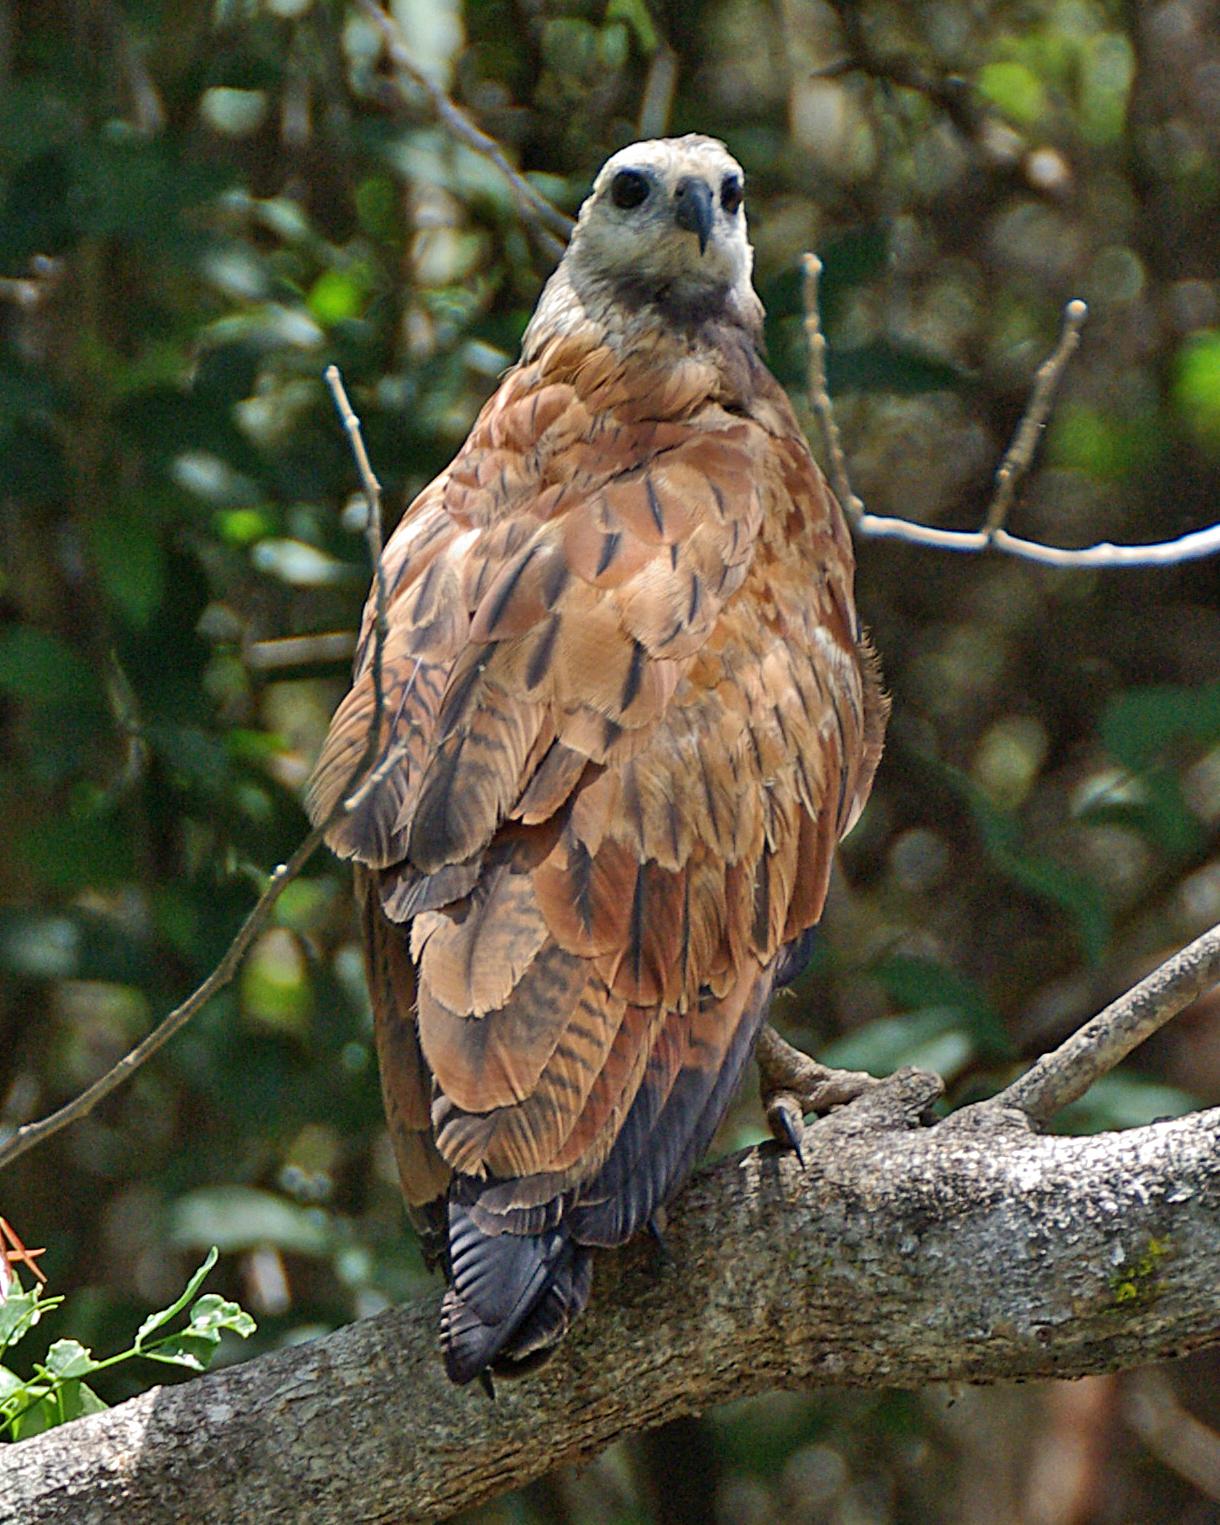 Black-collared Hawk Photo by Robert Polkinghorn